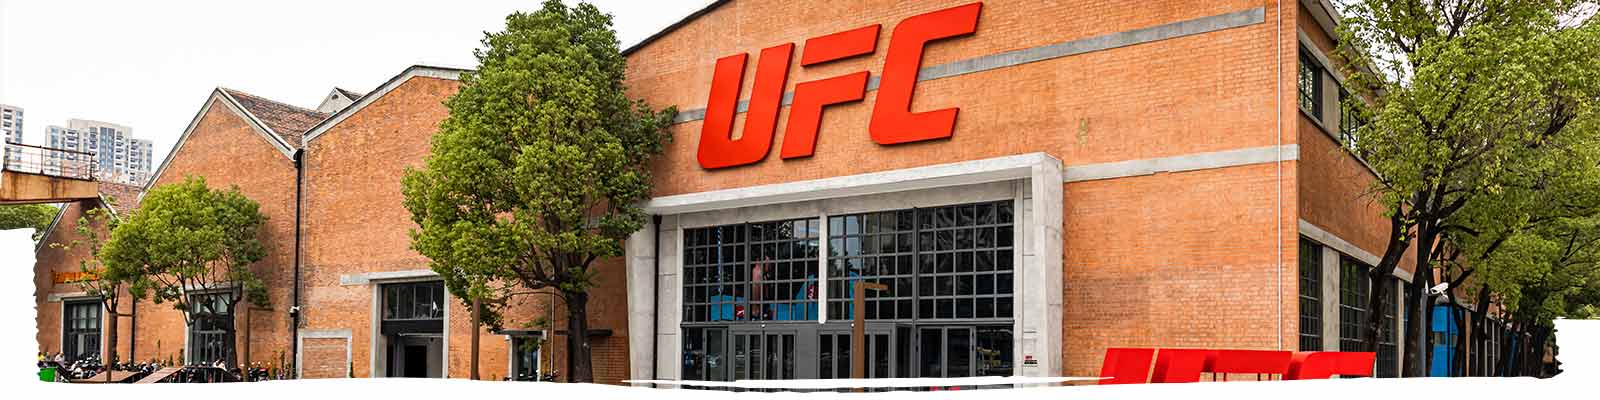 UFC SHANGHAI training facility center outer view